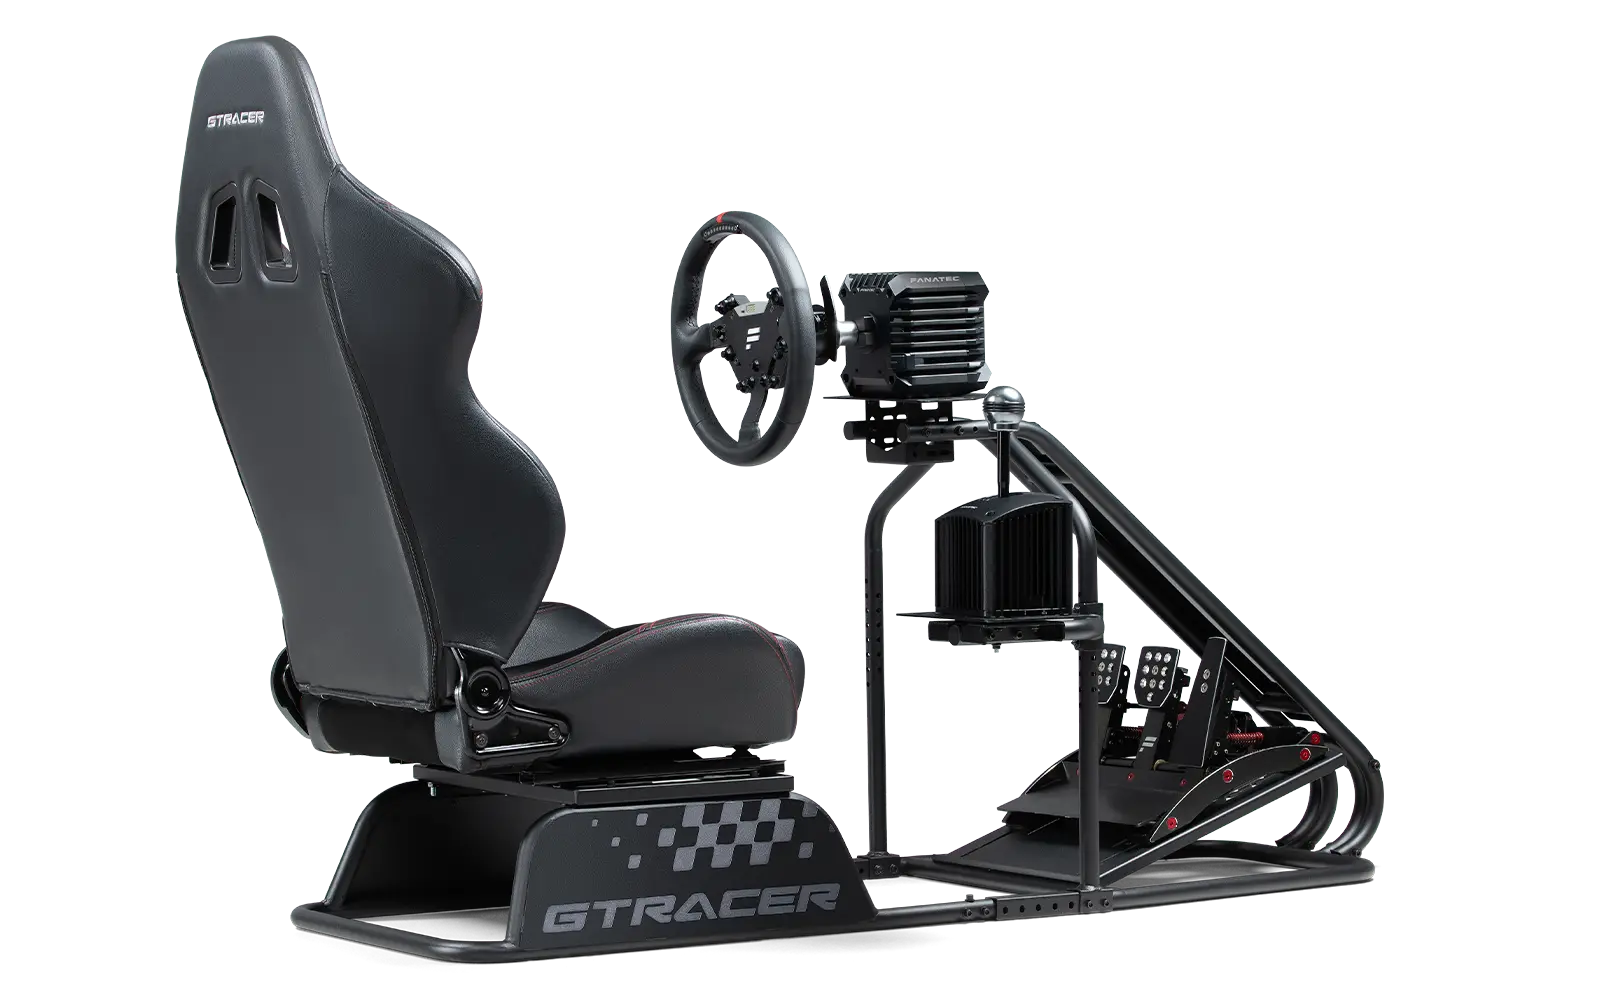 Next Level Racing GT Elite review: Best mid-range sim racing rig